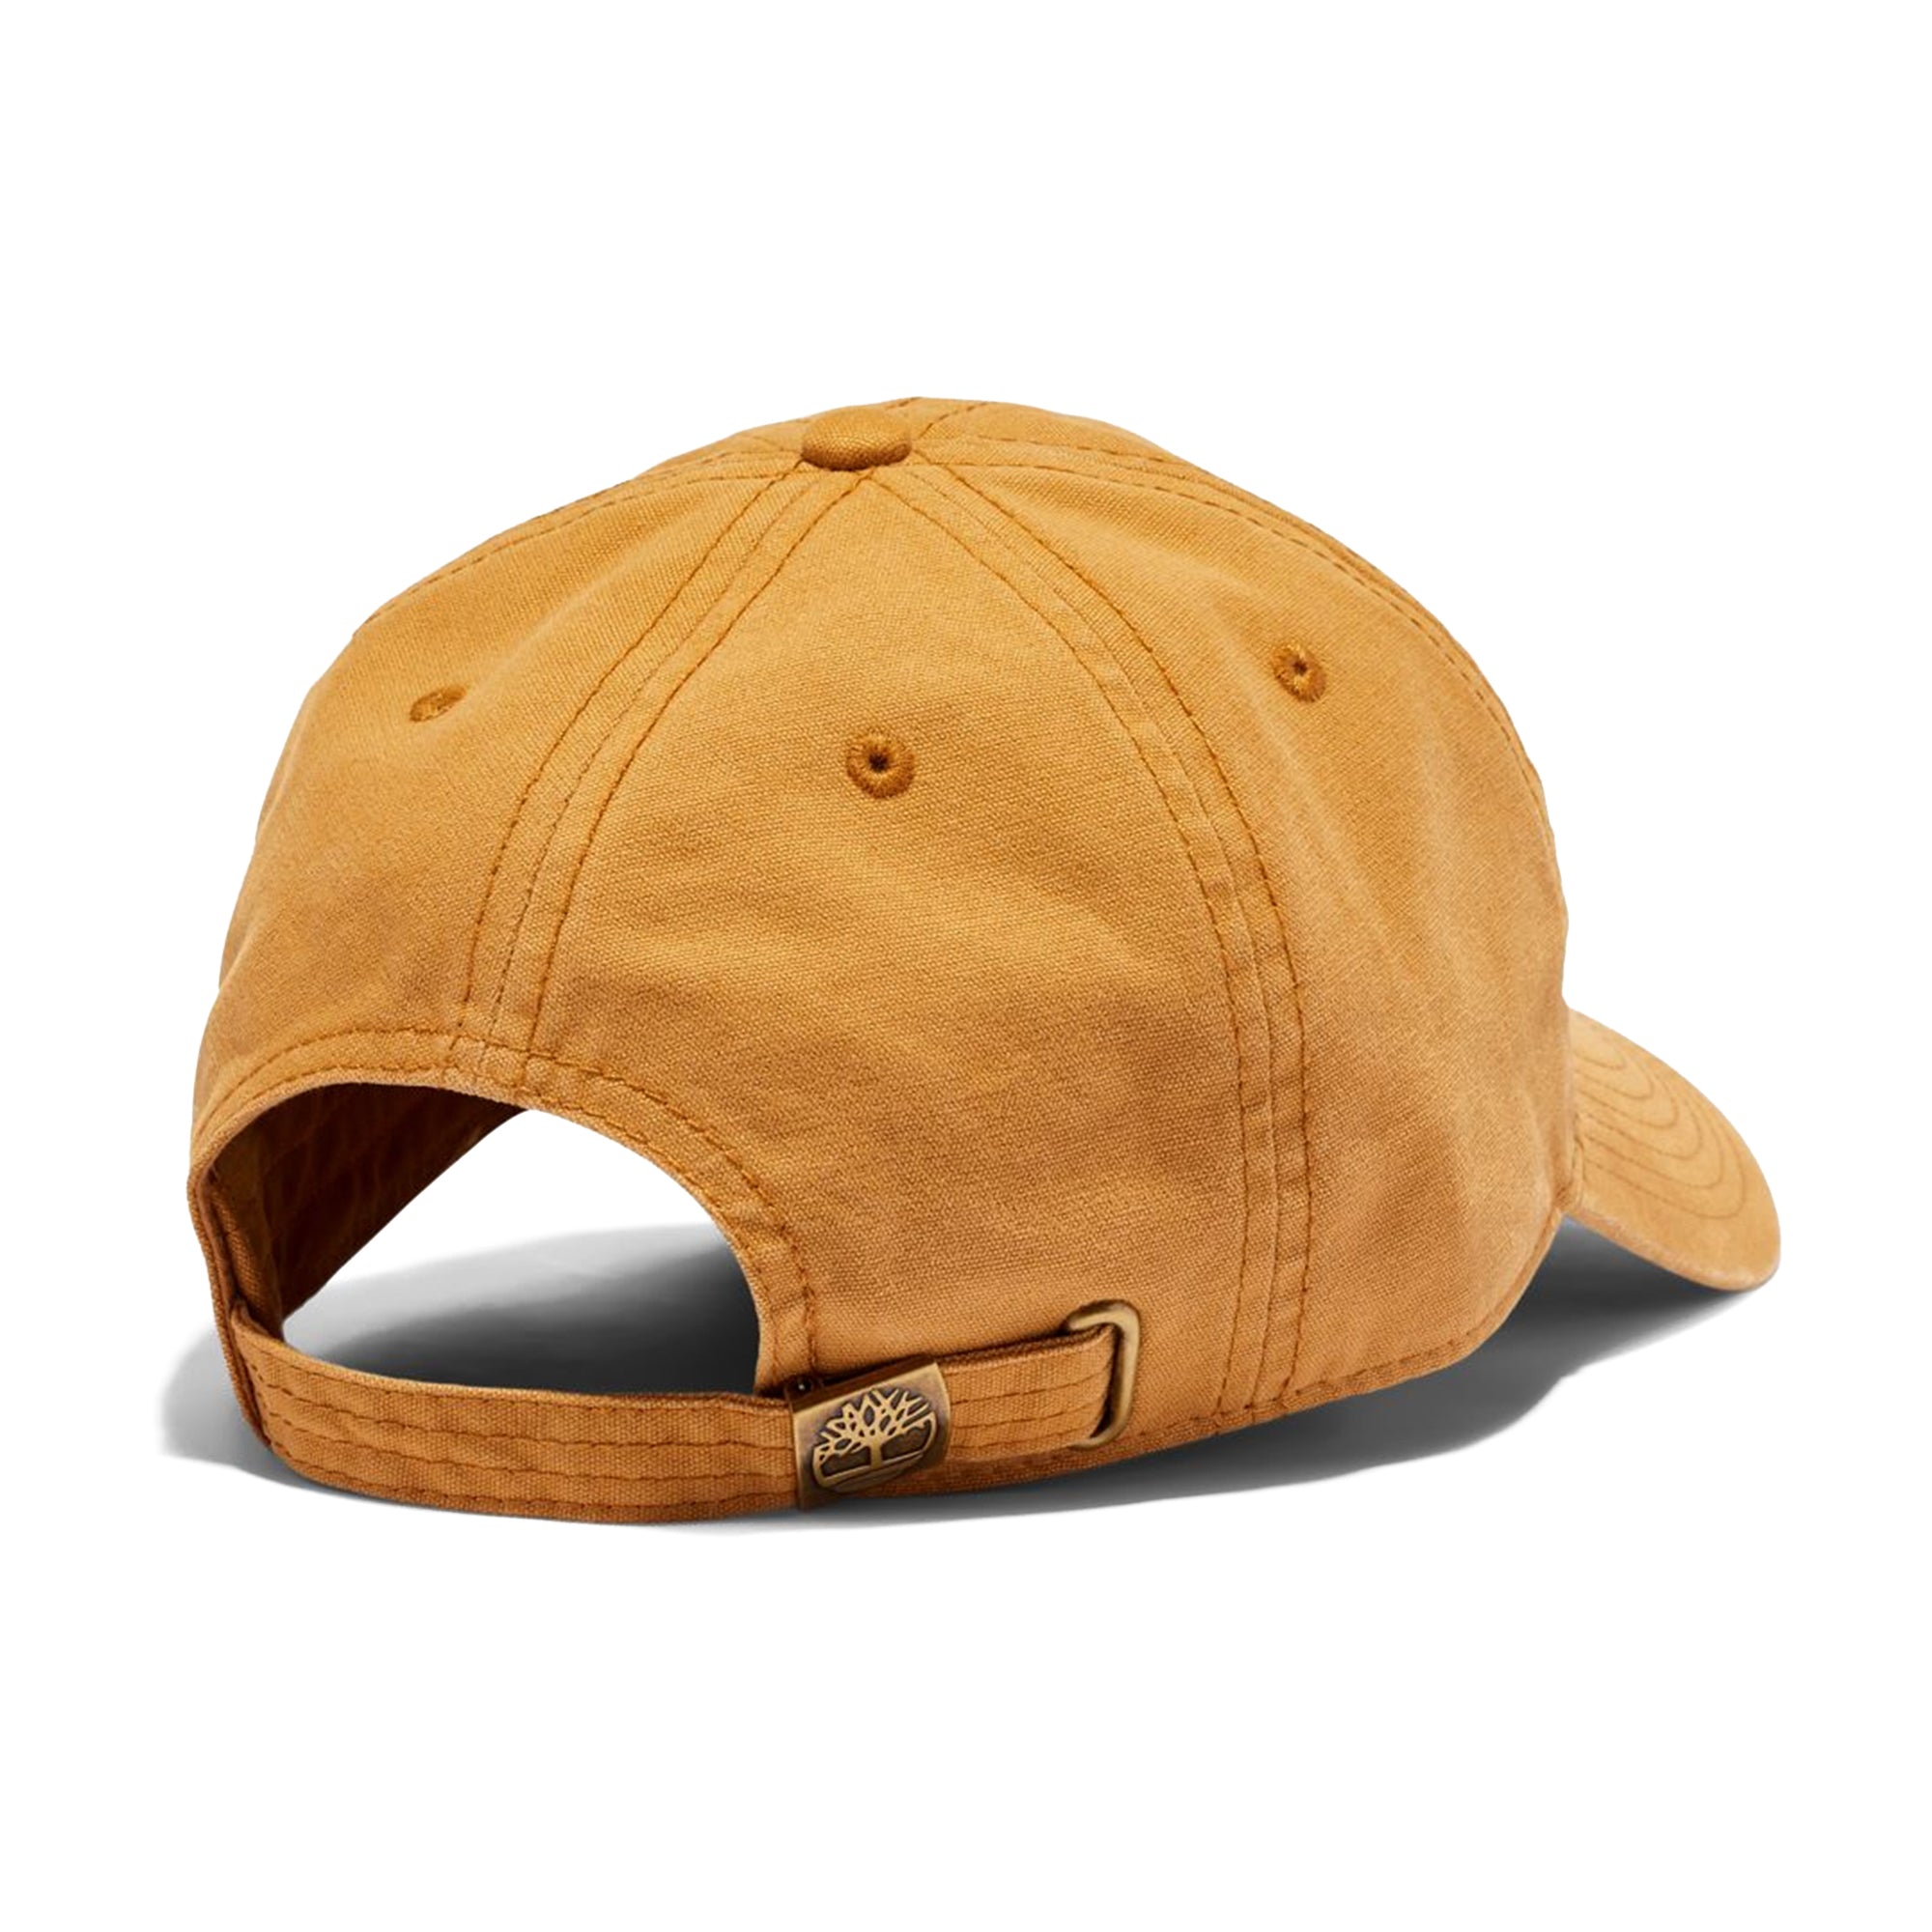 Timberland Baseball Cap - Wheat